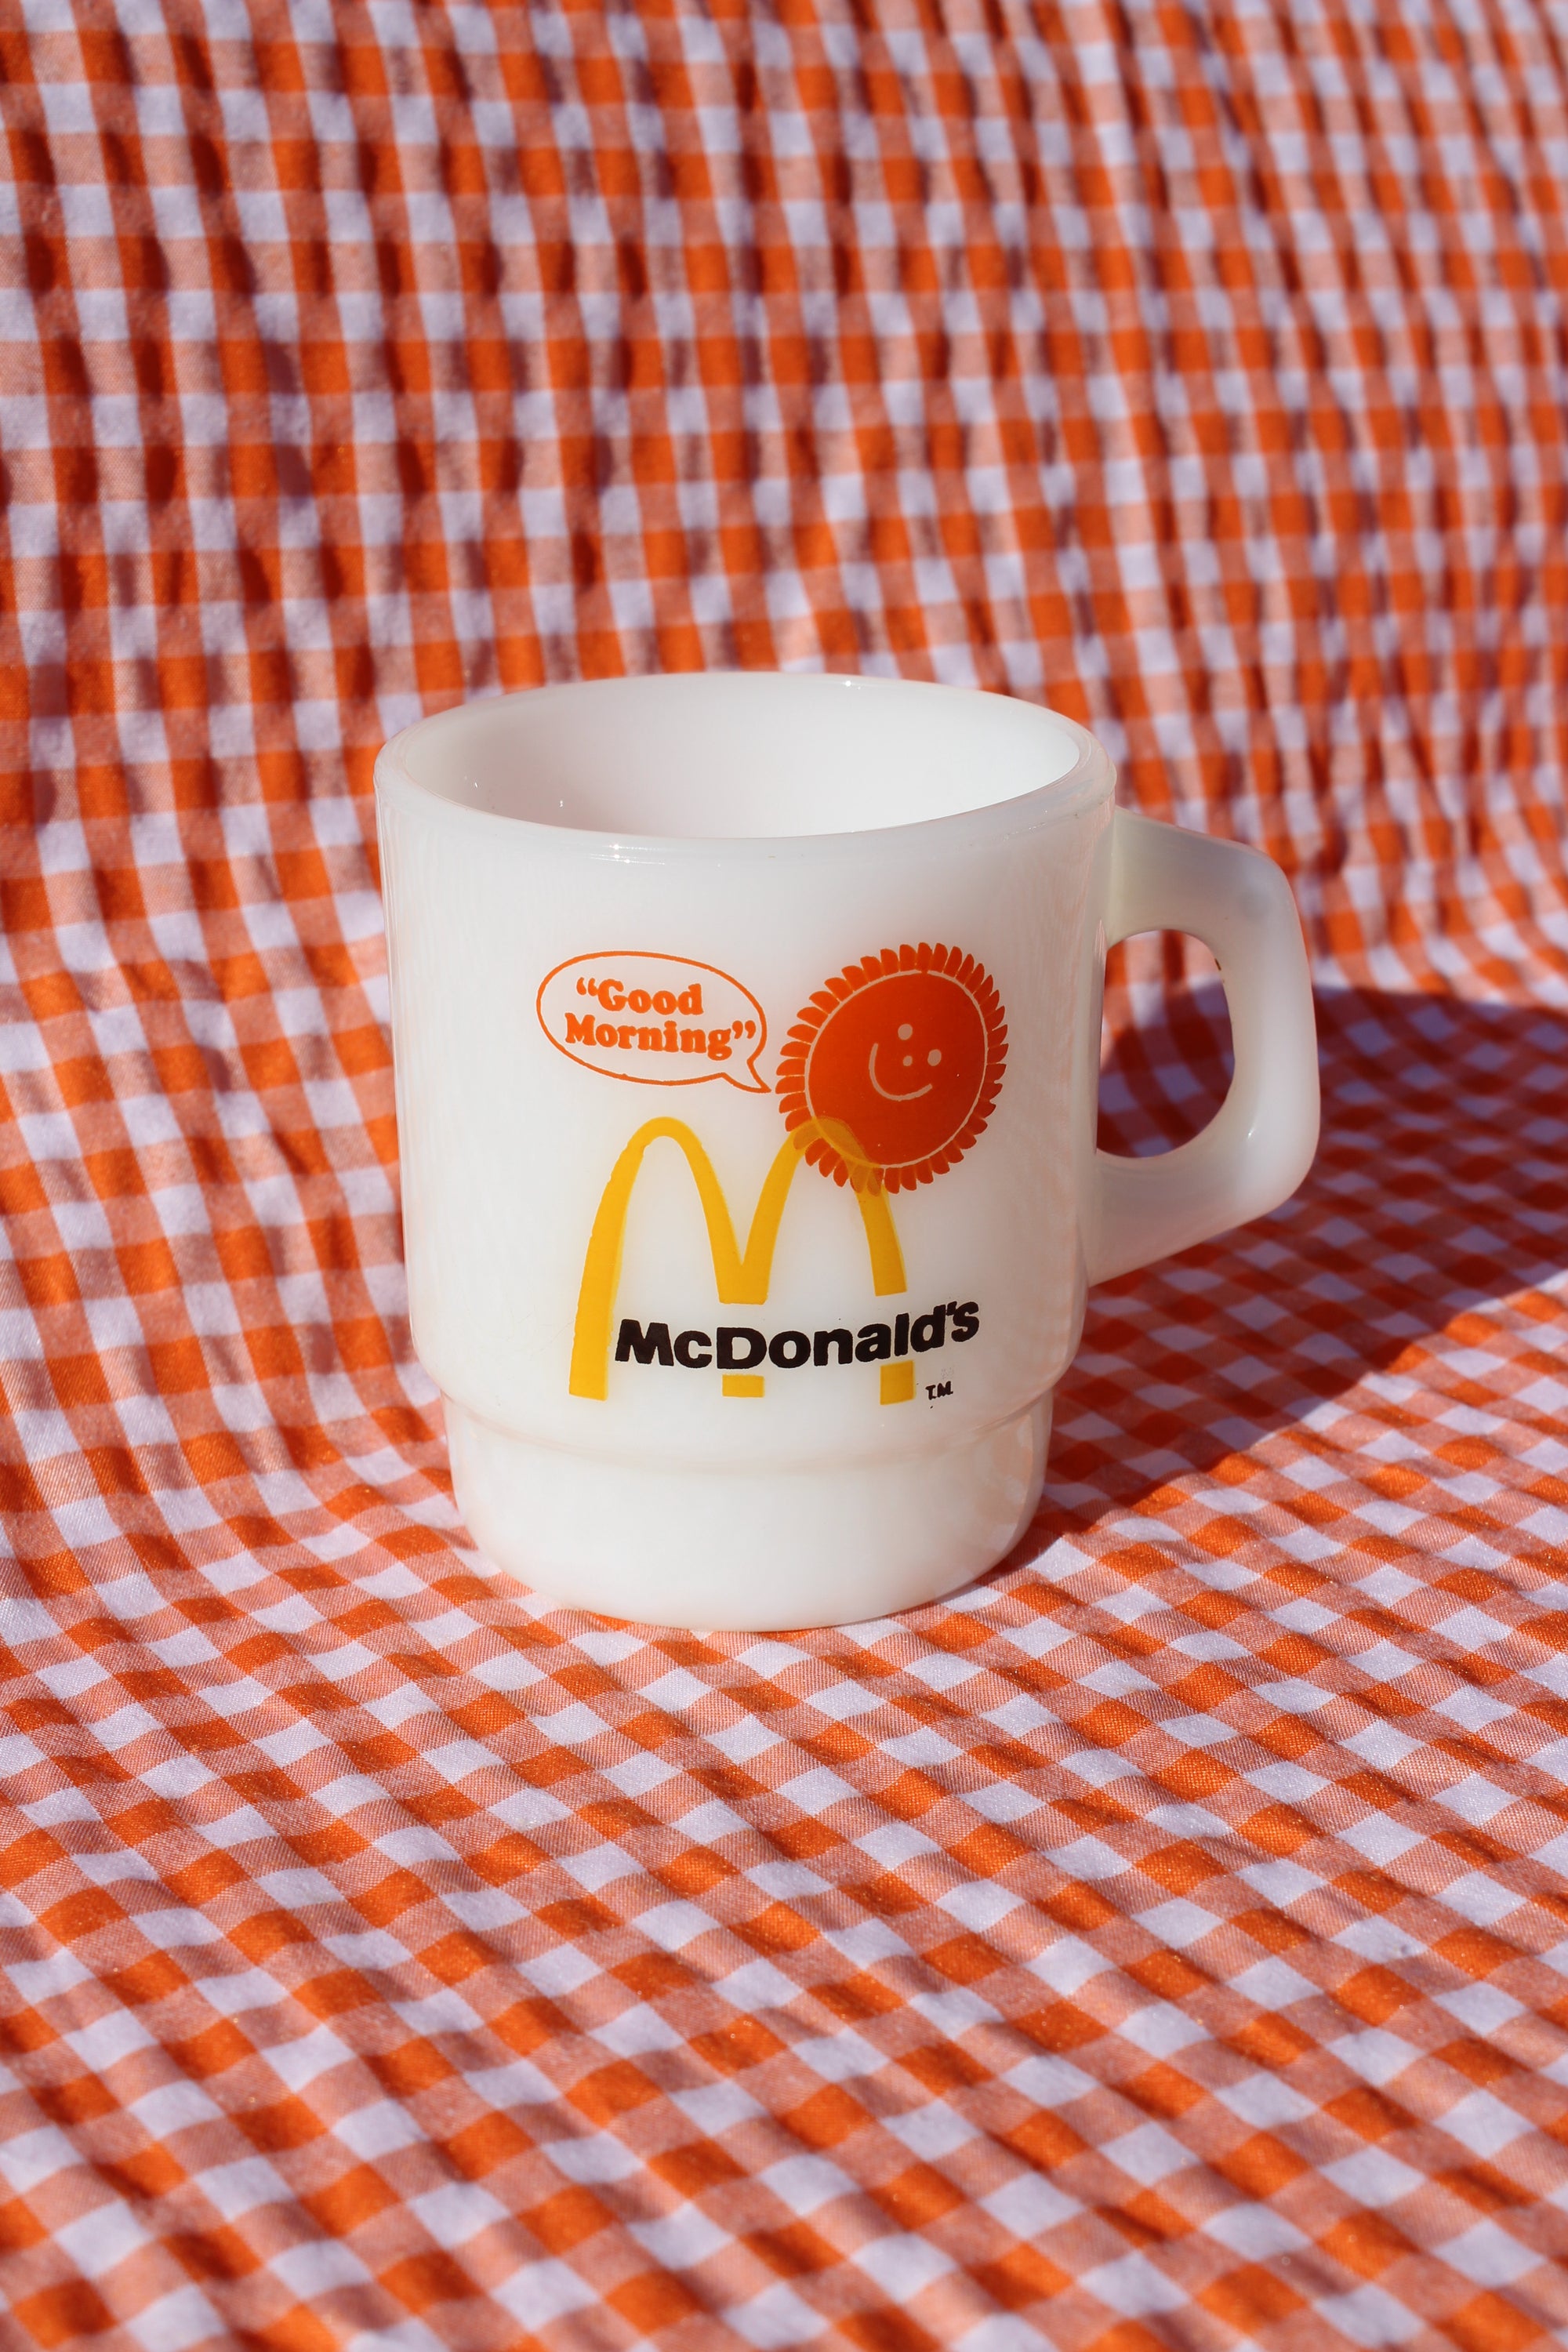 McDonalds Coffee Mug Lot Fire King Milk Glass Pilsner Beer Olympics Golden  Arches Fast Food